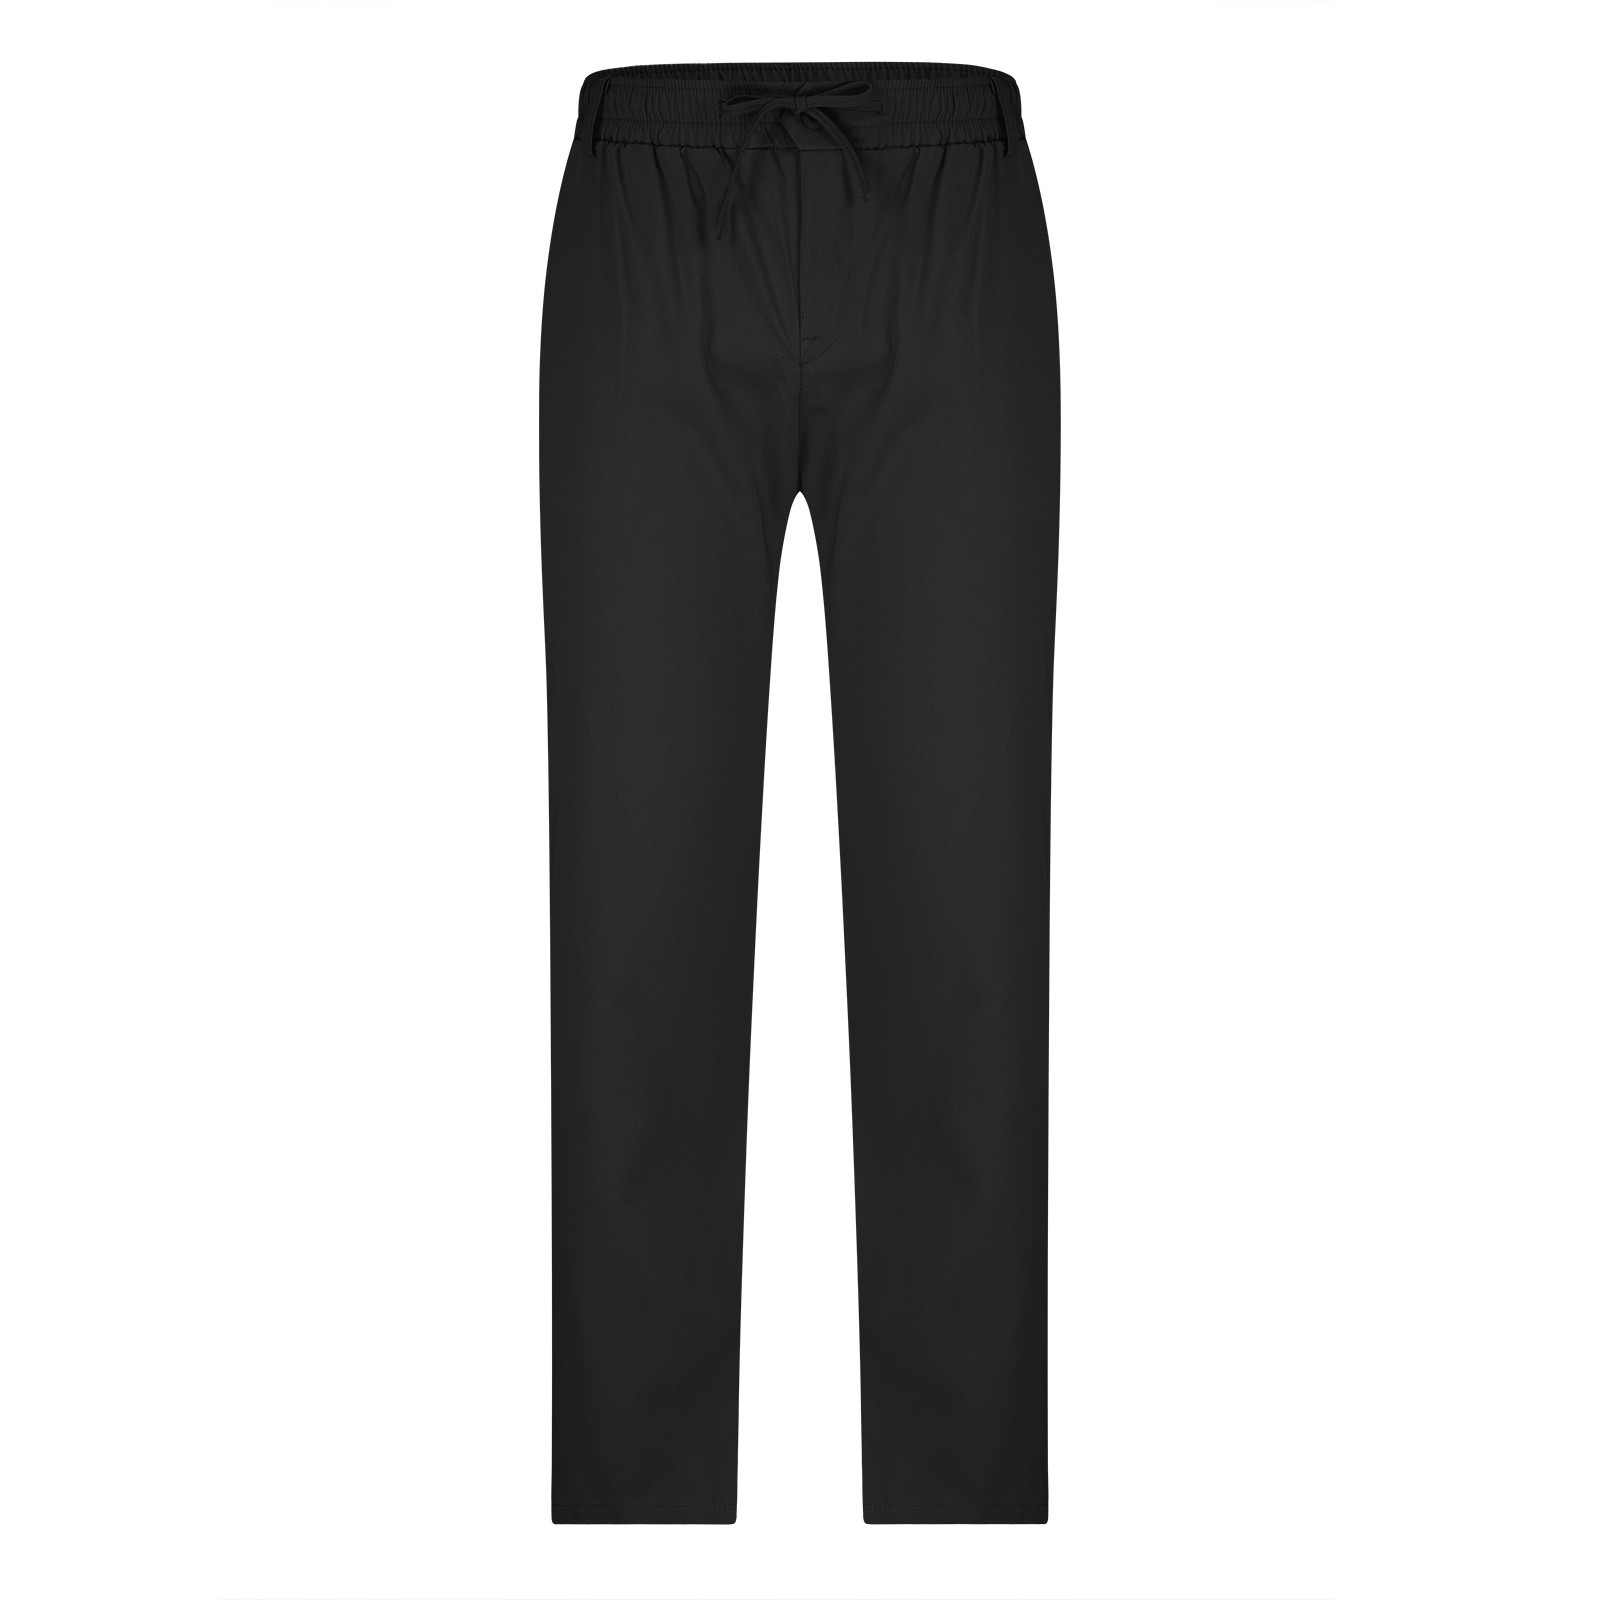 Tdoqot Chinos Pants Men- Drawstring Comftable Elastic Waist Slim Casual Cotton Mens Pants Black - image 4 of 6